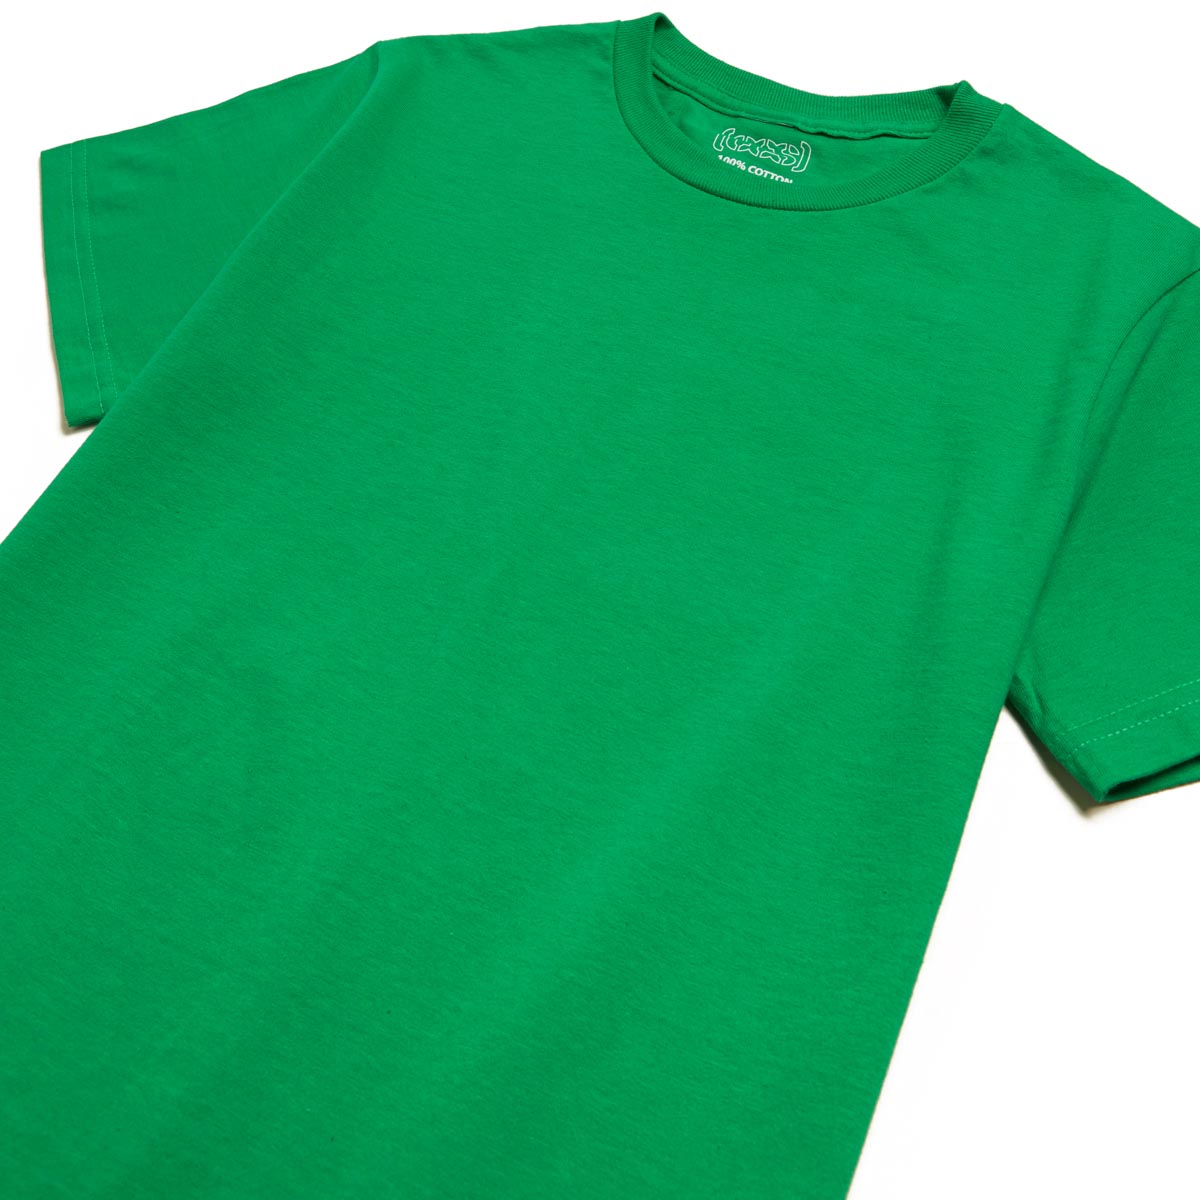 CCS Original Heavyweight T-Shirt - Green image 2